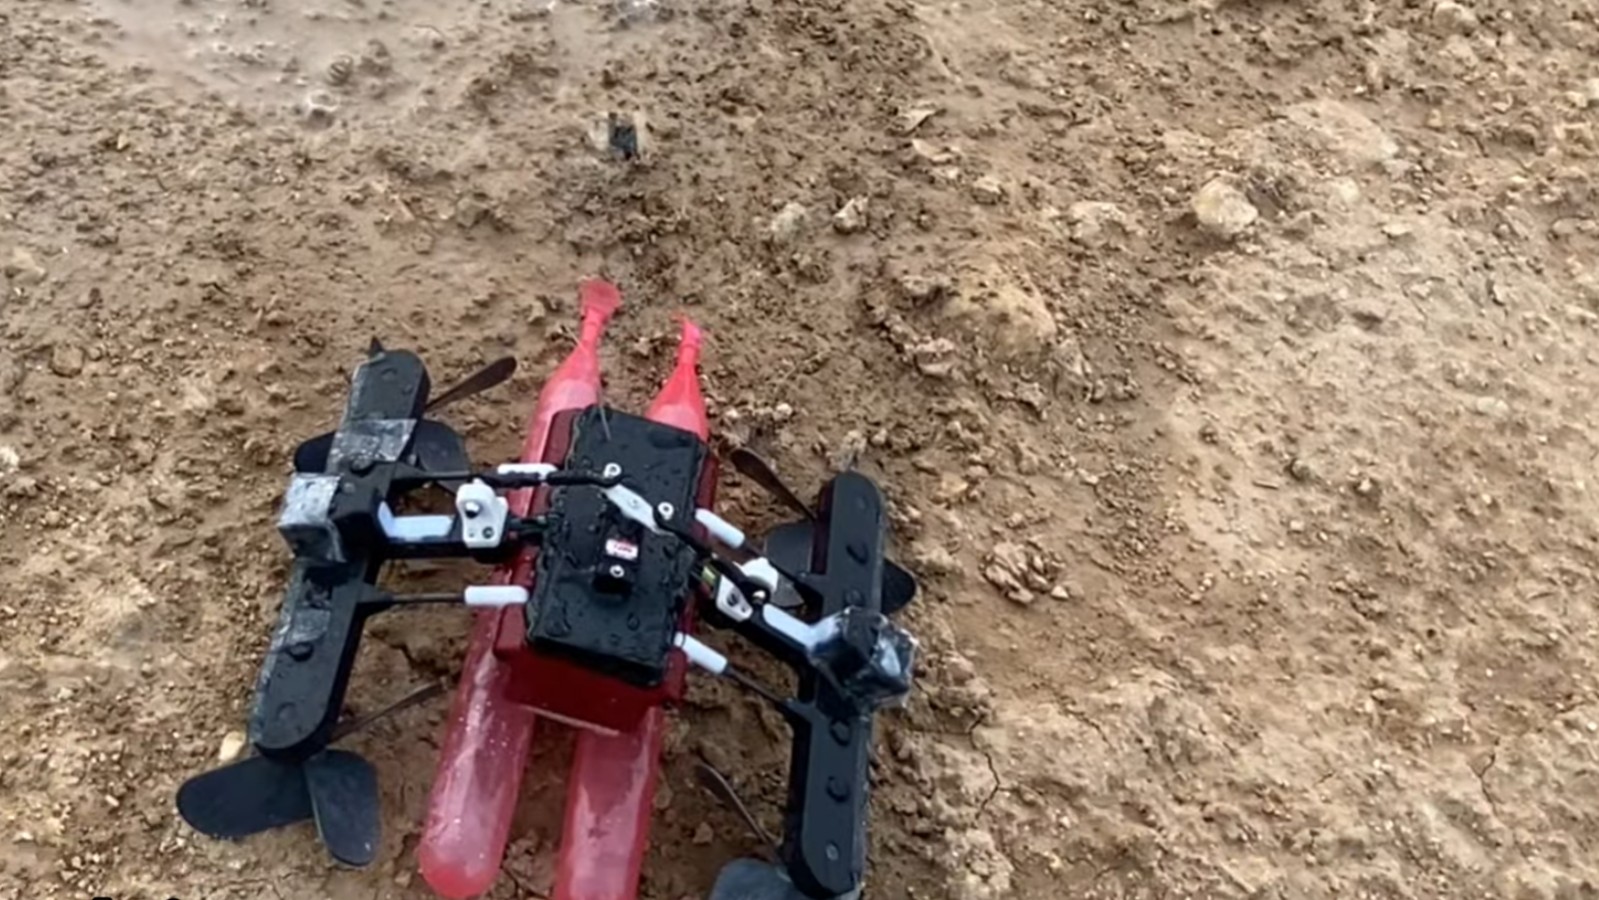 The AmphiSTAR robot from Ben-Gurion University can swim, run on water and crawl on uneven terrain. Photo: screenshot